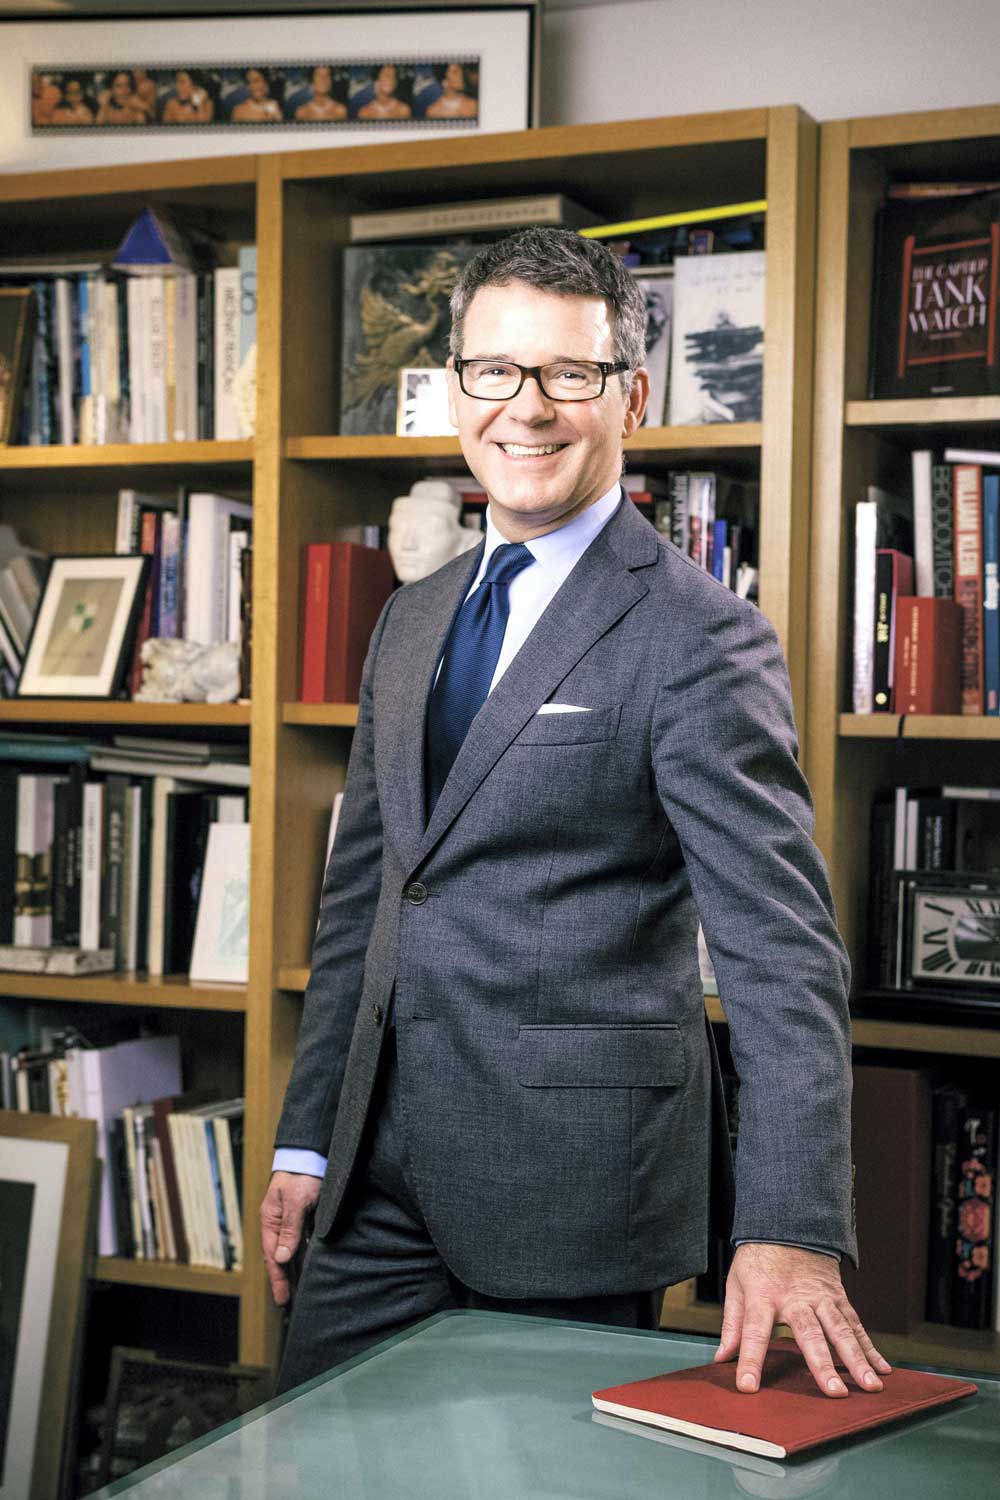 Pierre Rainero, Heritage Director at Cartier